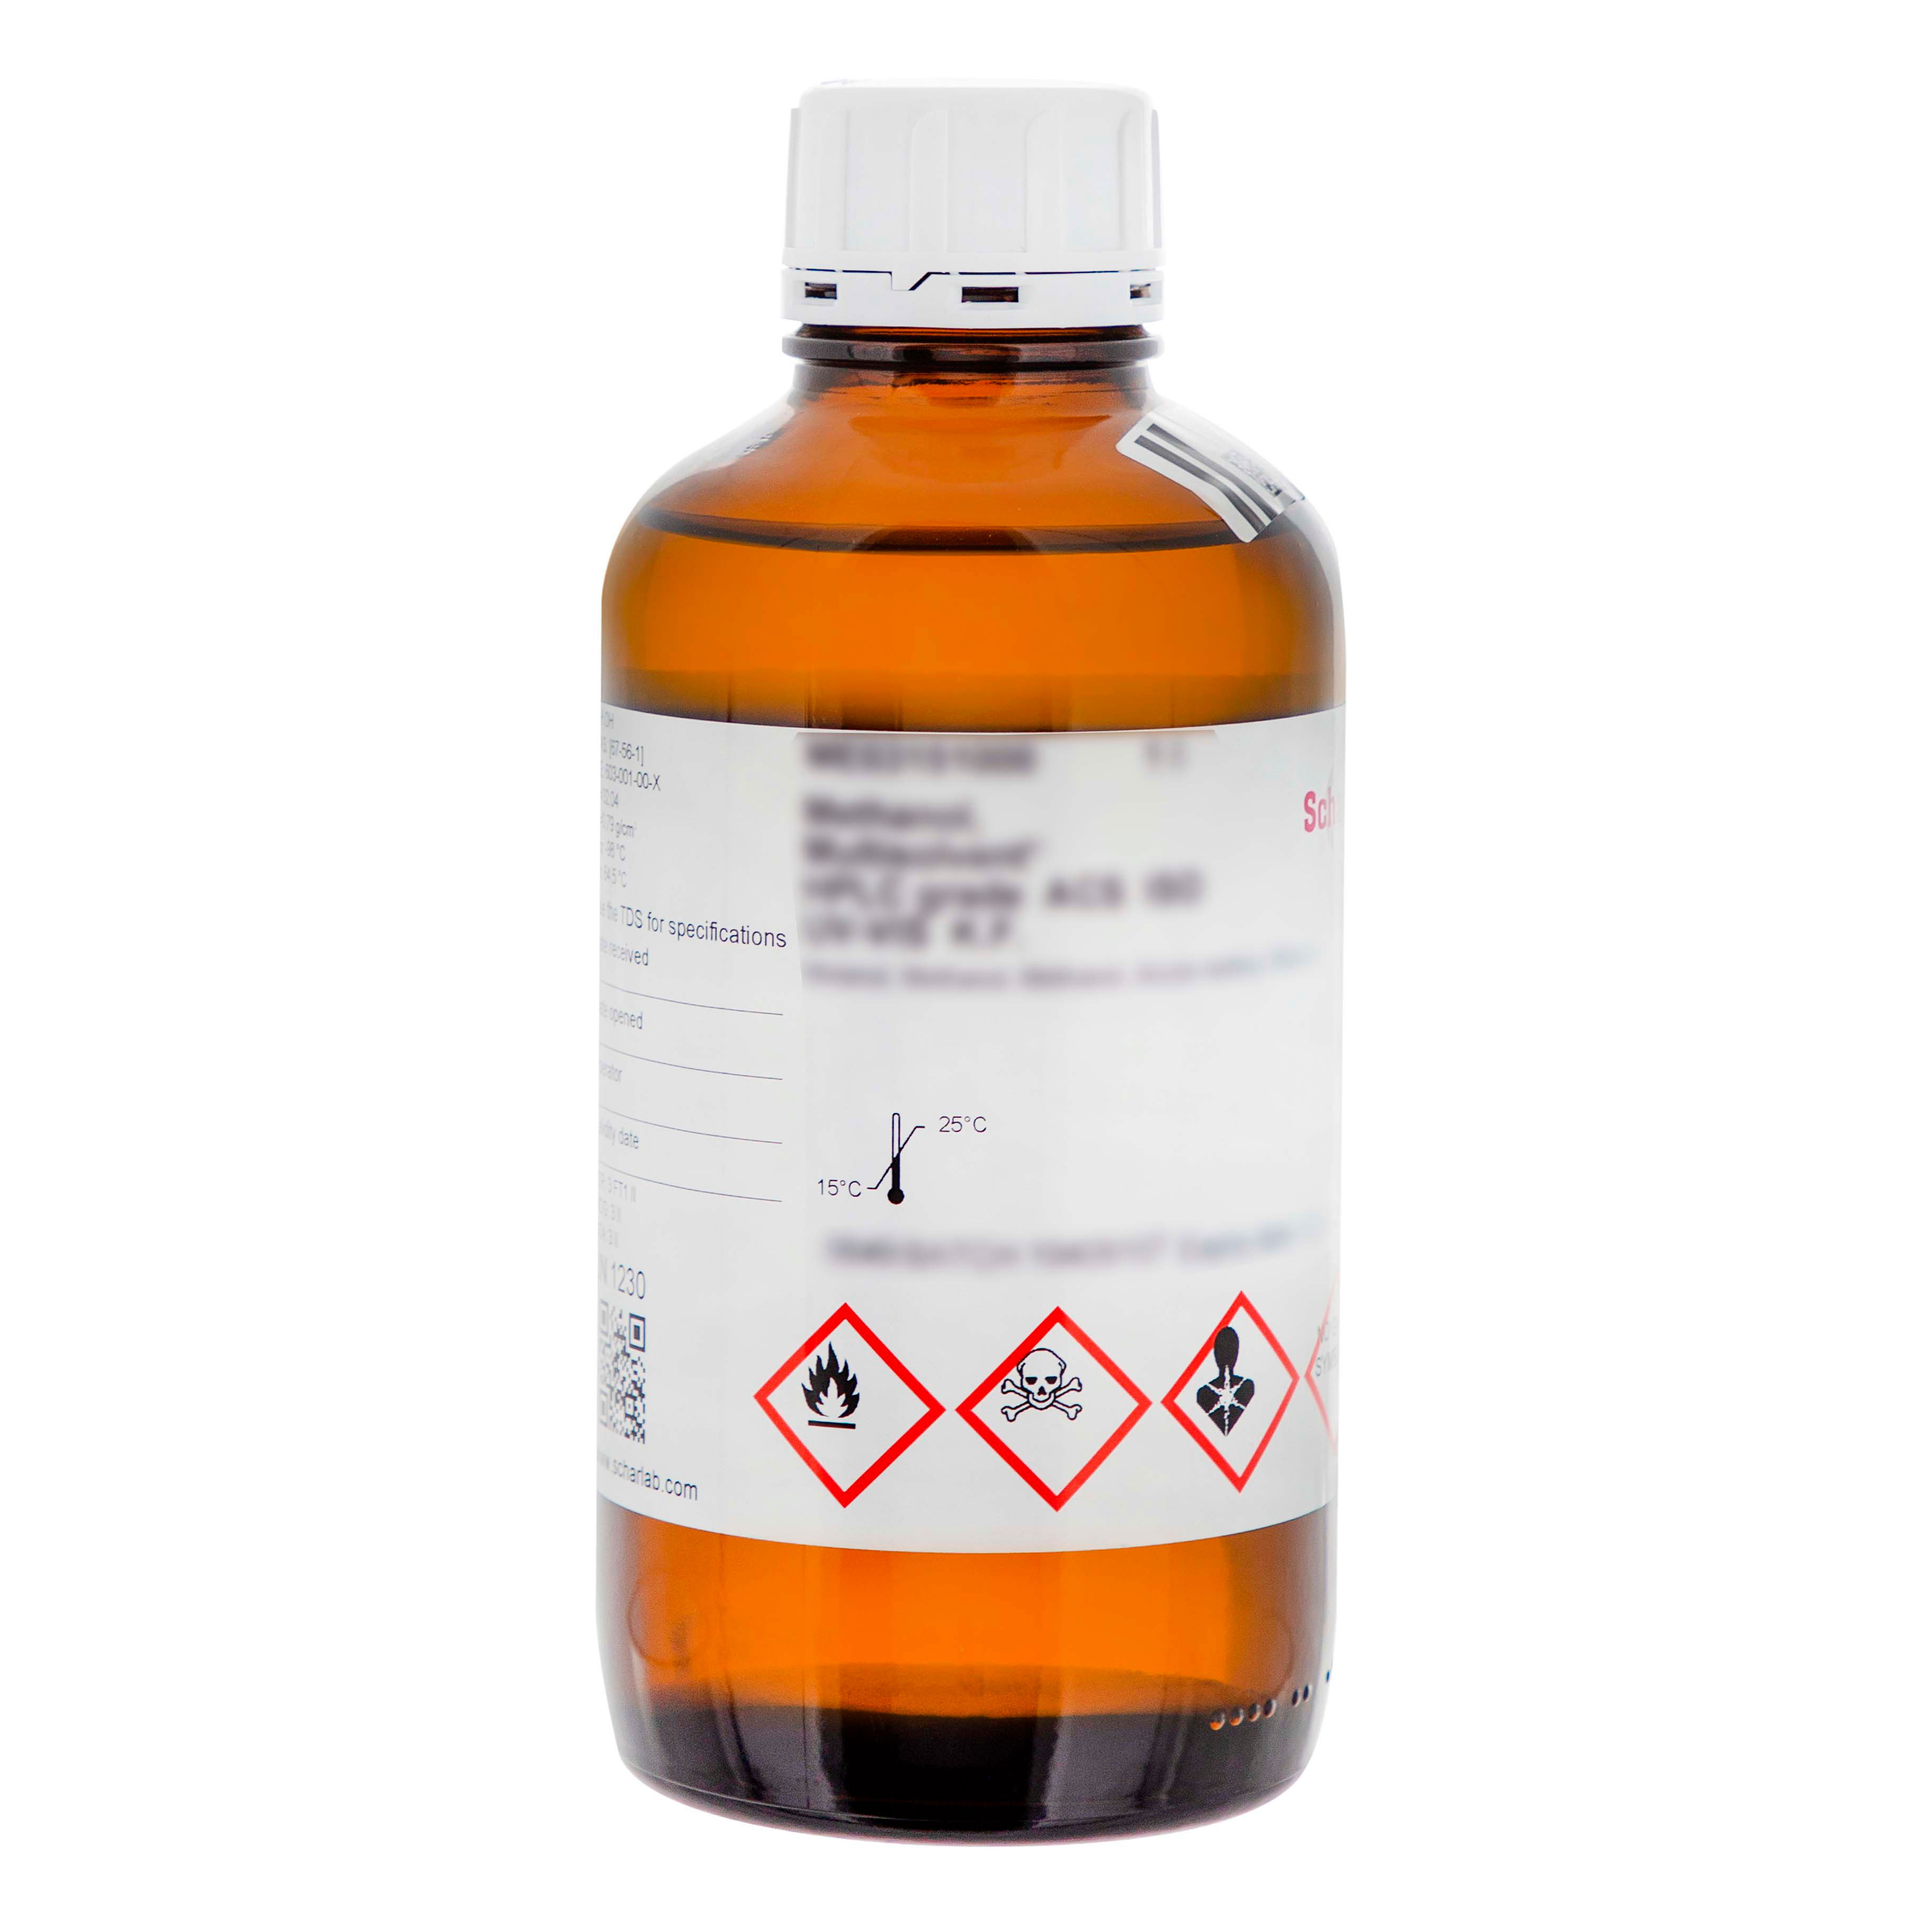 Amoníaco, solución 25% p/p, Pharmpur®, Ph Eur